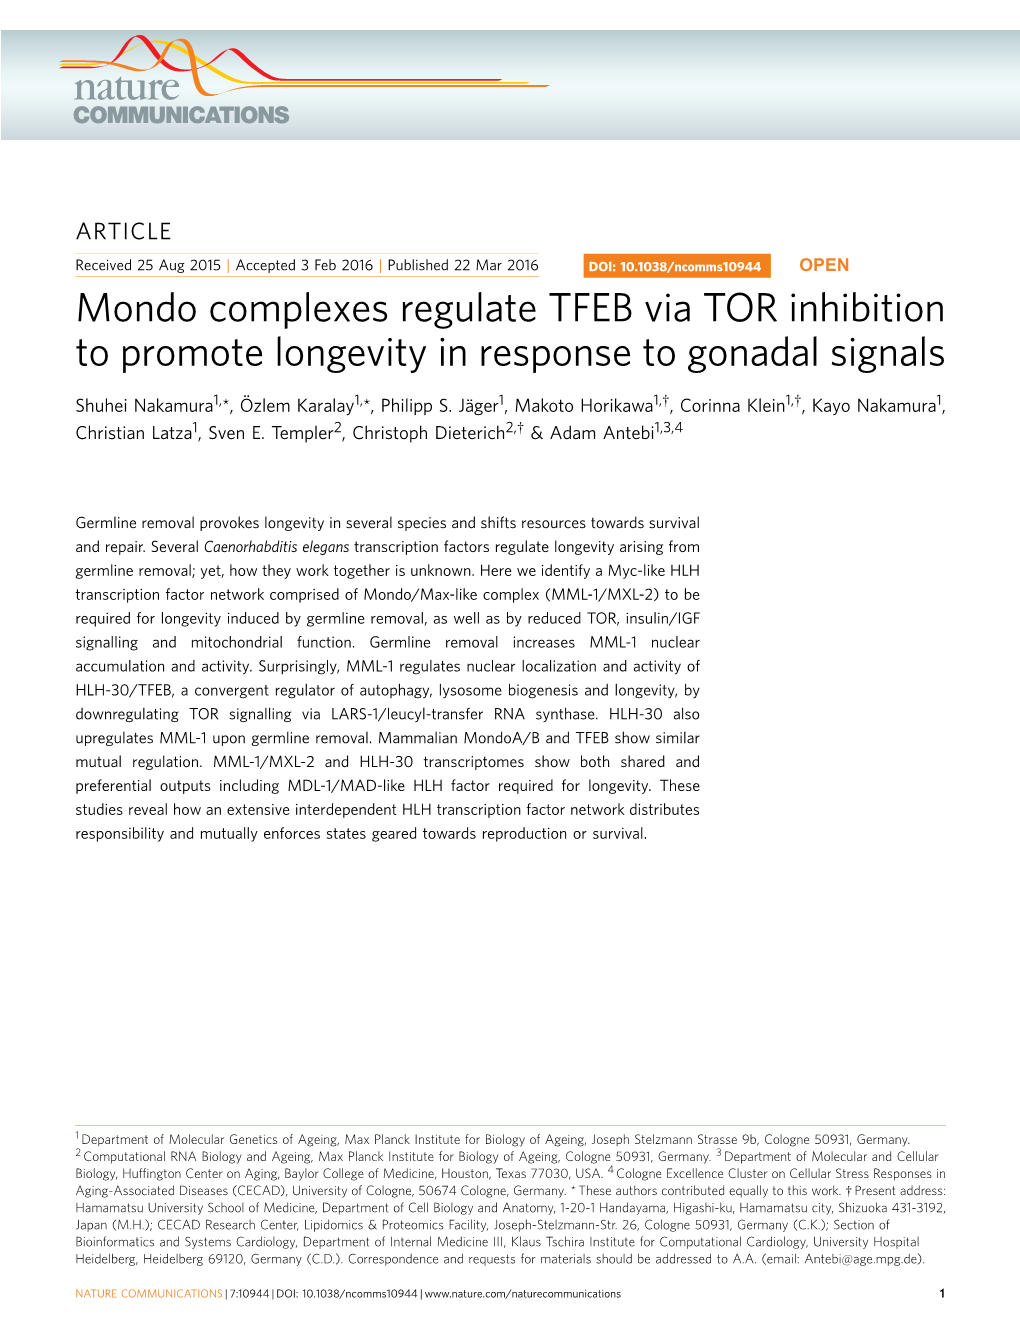 Mondo Complexes Regulate TFEB Via TOR Inhibition to Promote Longevity in Response to Gonadal Signals